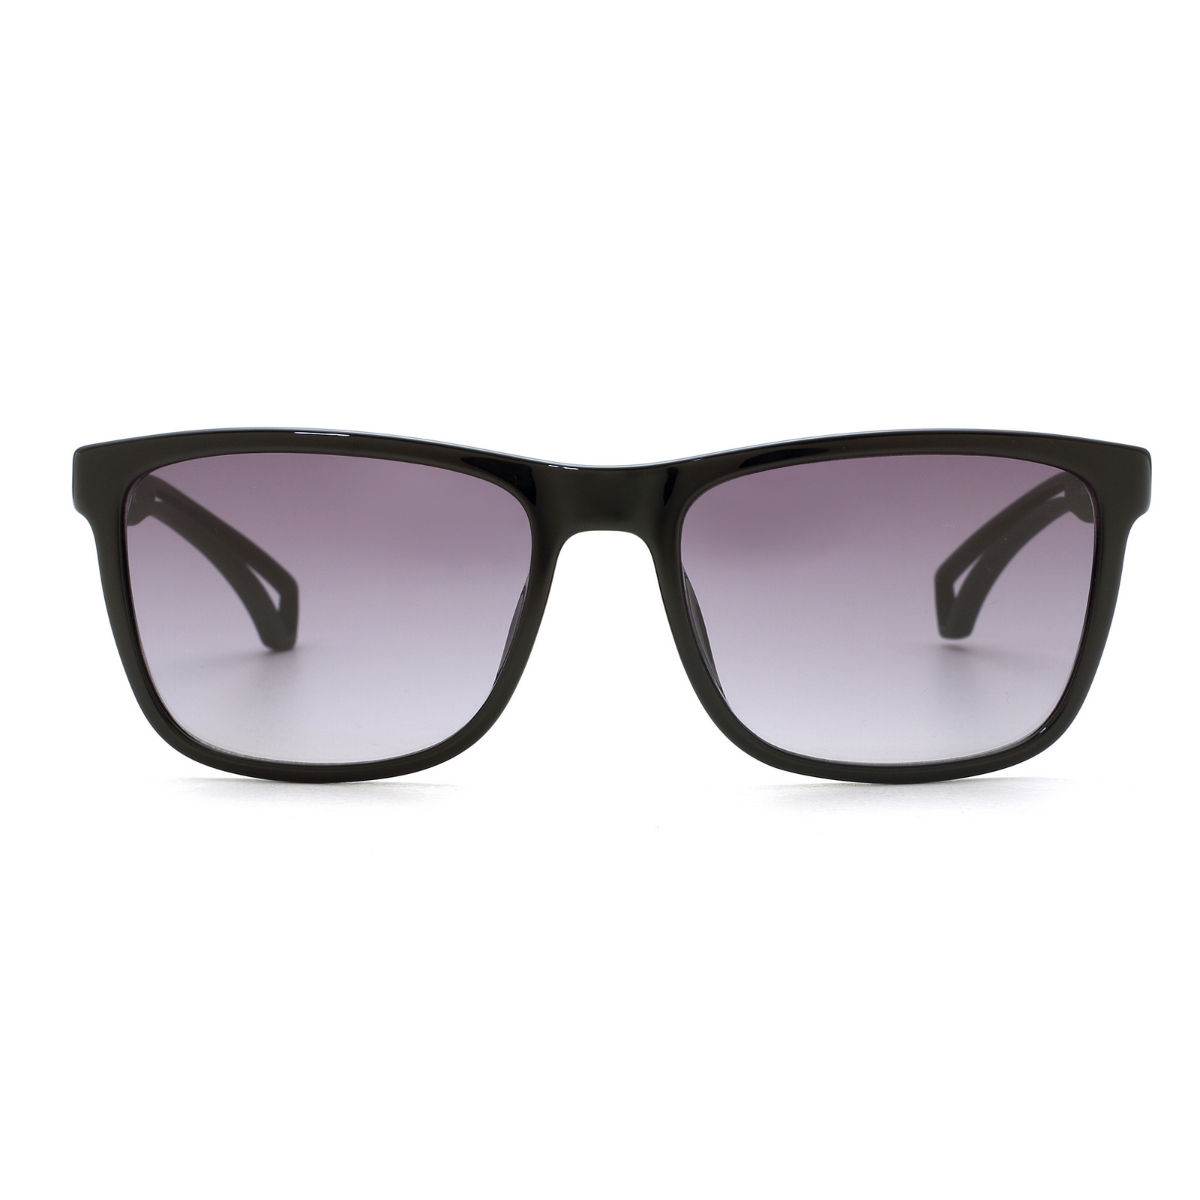 CALVIN KLEIN Eyewear SS18 Ad Campaign, Style CK18705. | Calvin klein glasses,  Supermodels, Calvin klein